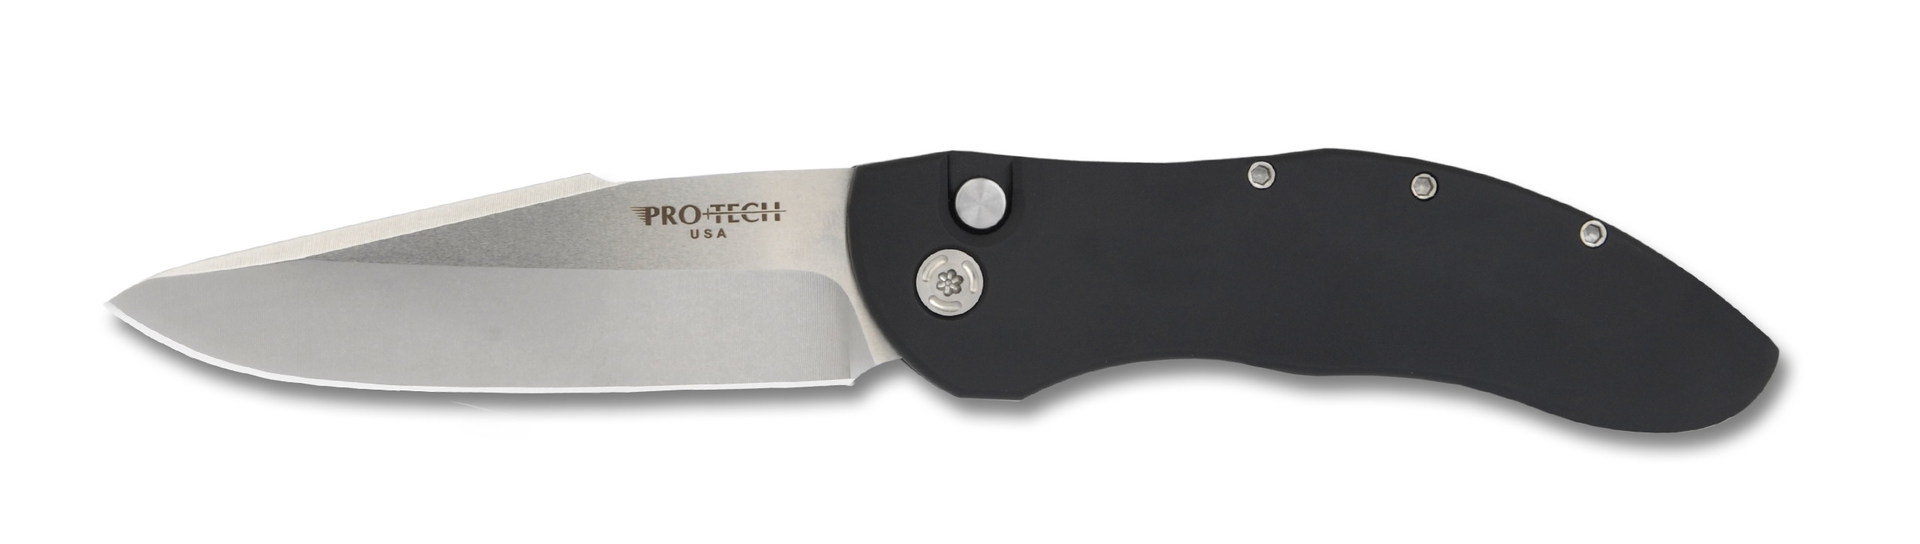 Нож Pro-Tech Doru складной сталь 154CM рукоять алюминий - фото 1